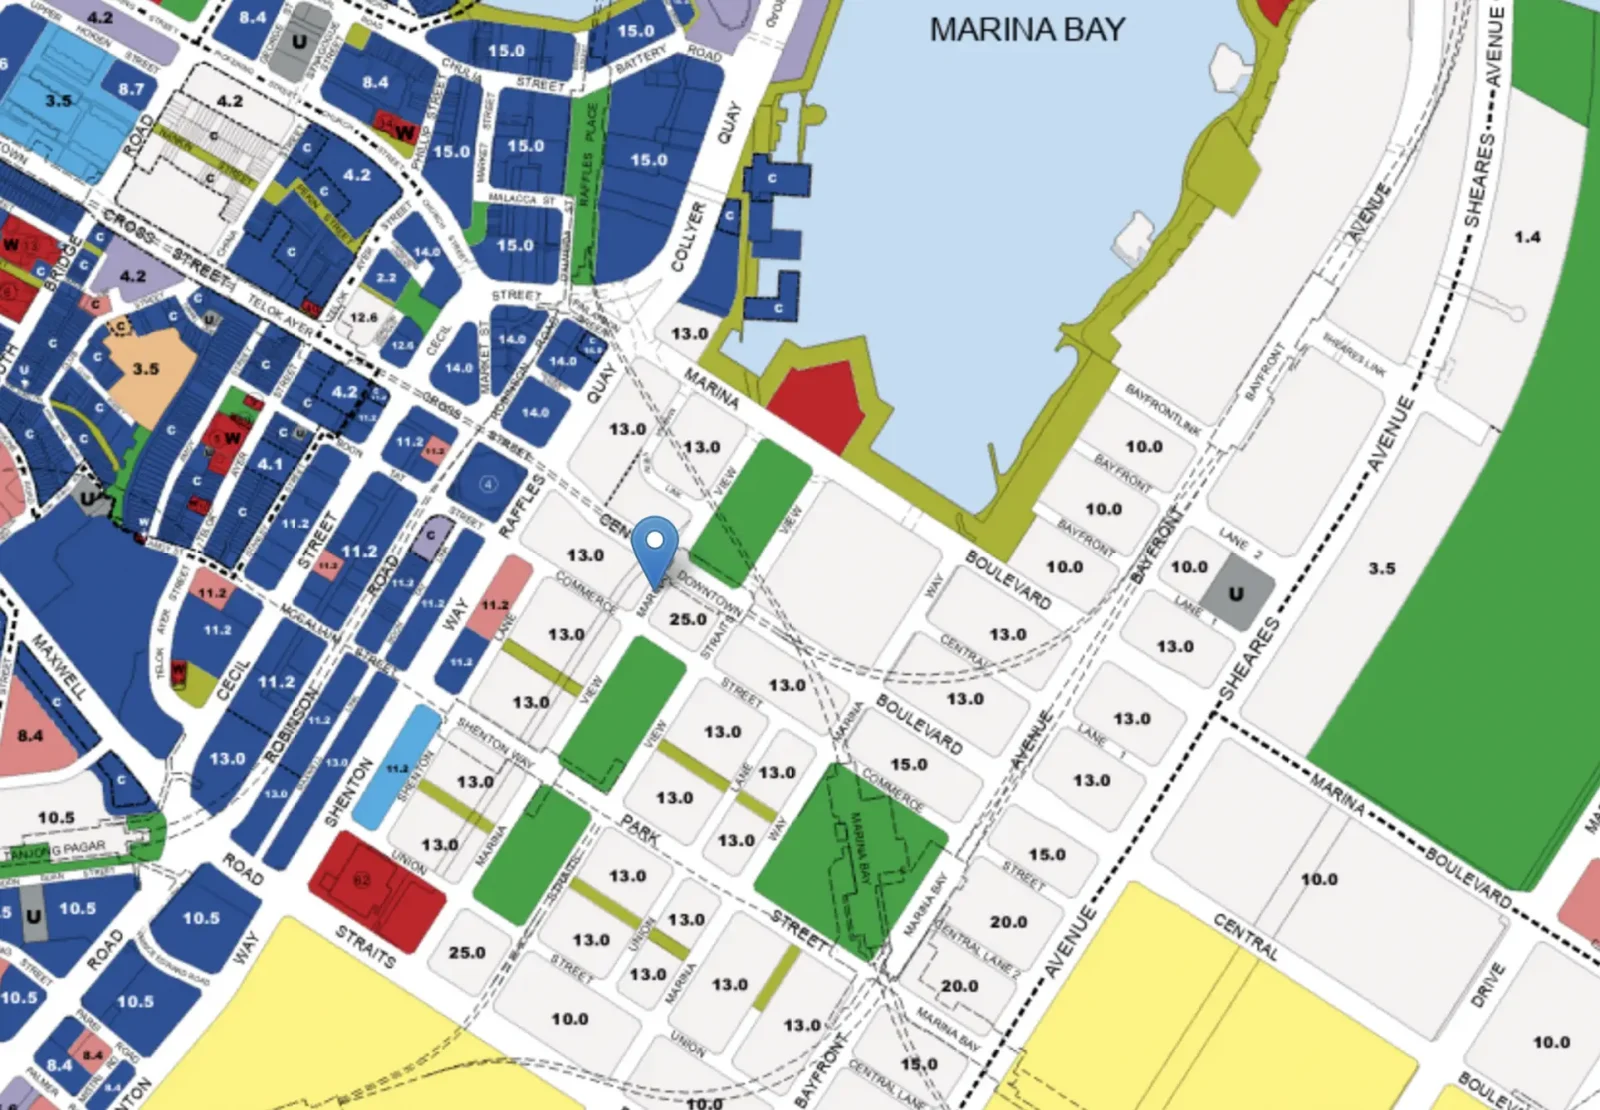 Marina Bay URA Master Plan